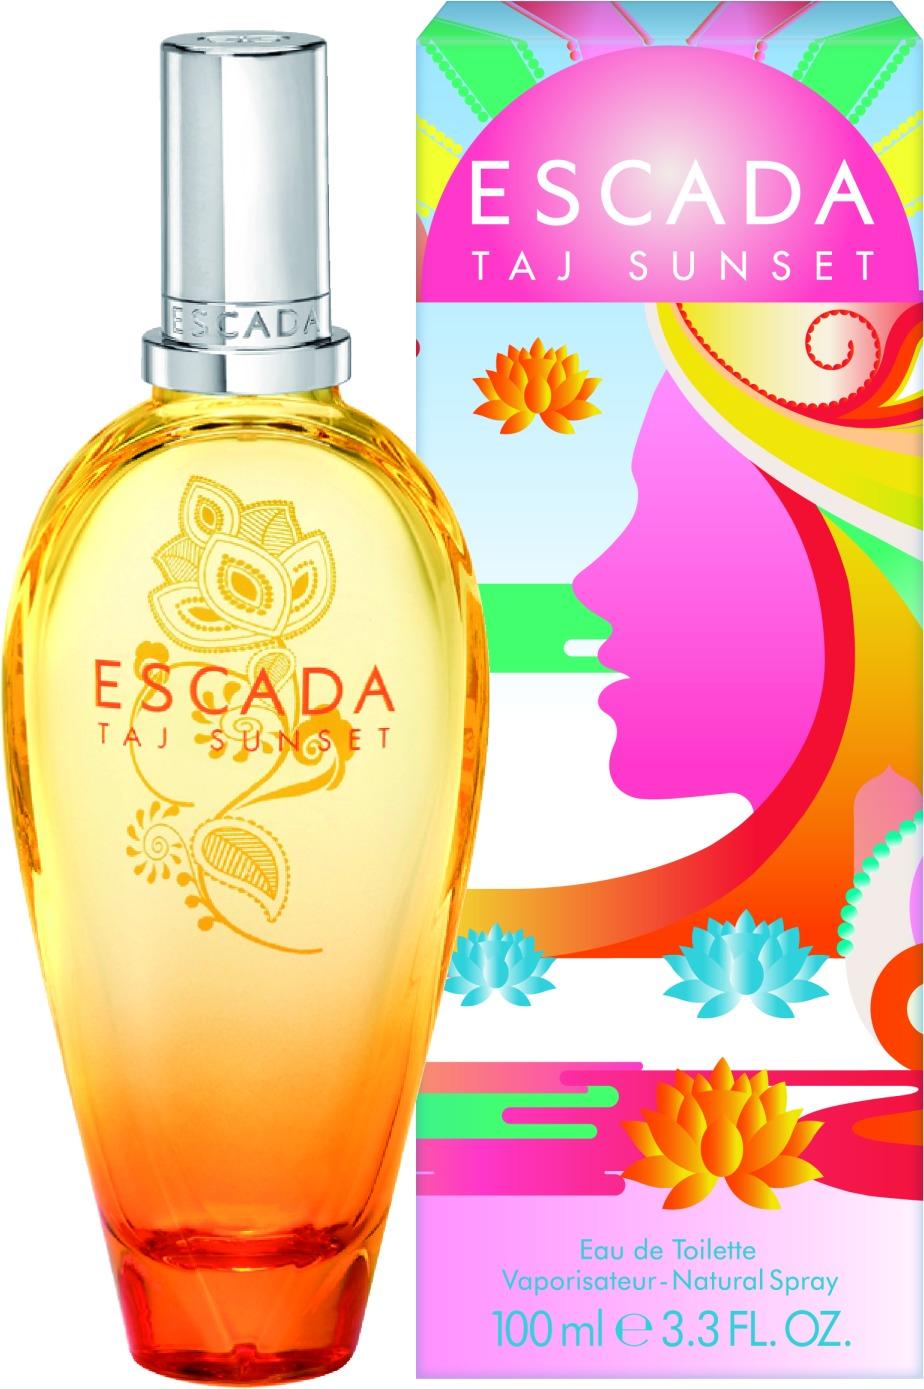 Taj Sunset - Parfum Gallerie